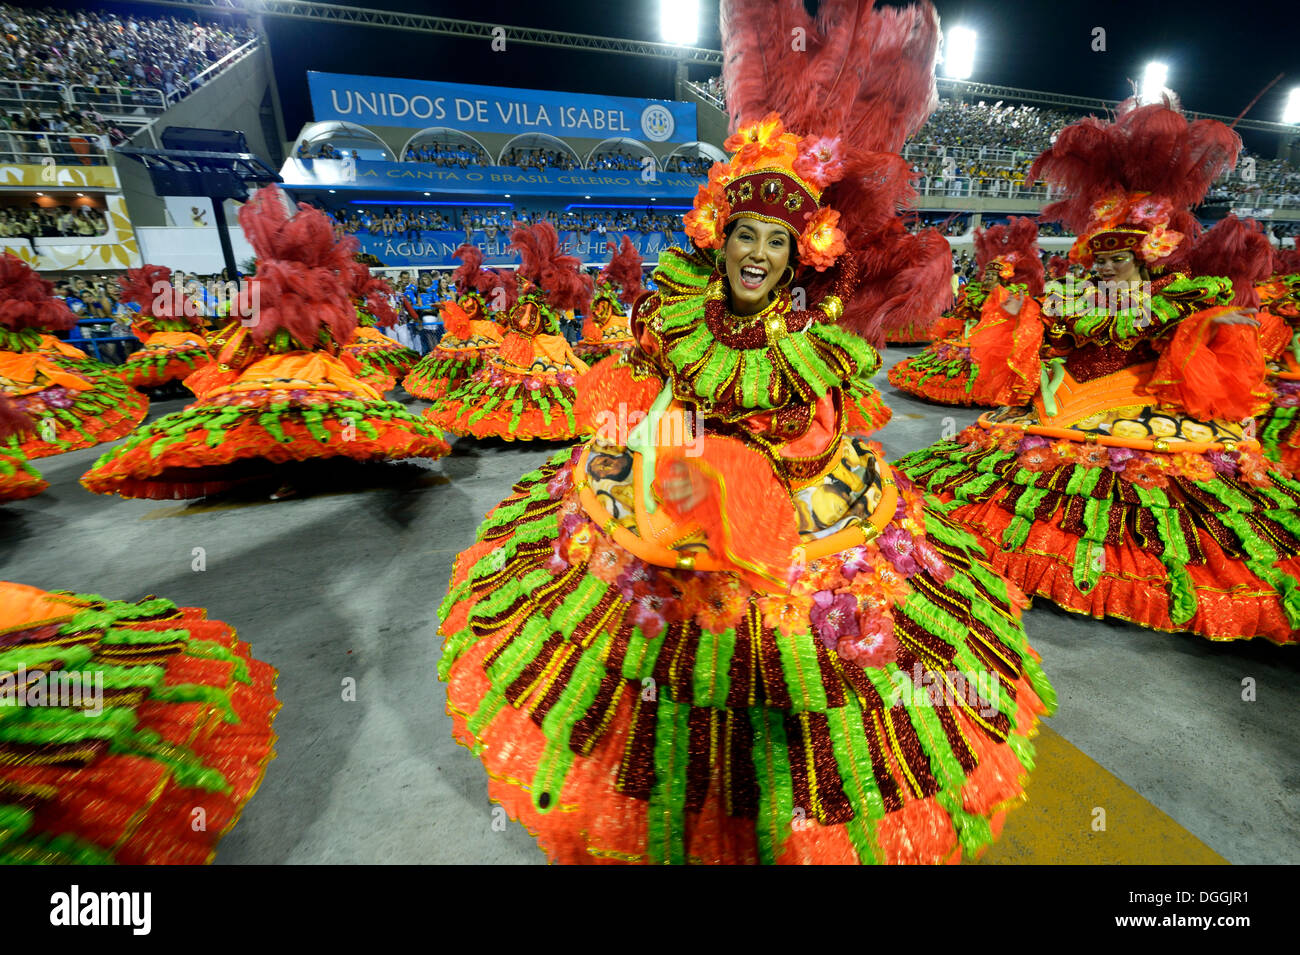 Samba dancer brazil hi-res stock photography and images - Alamy